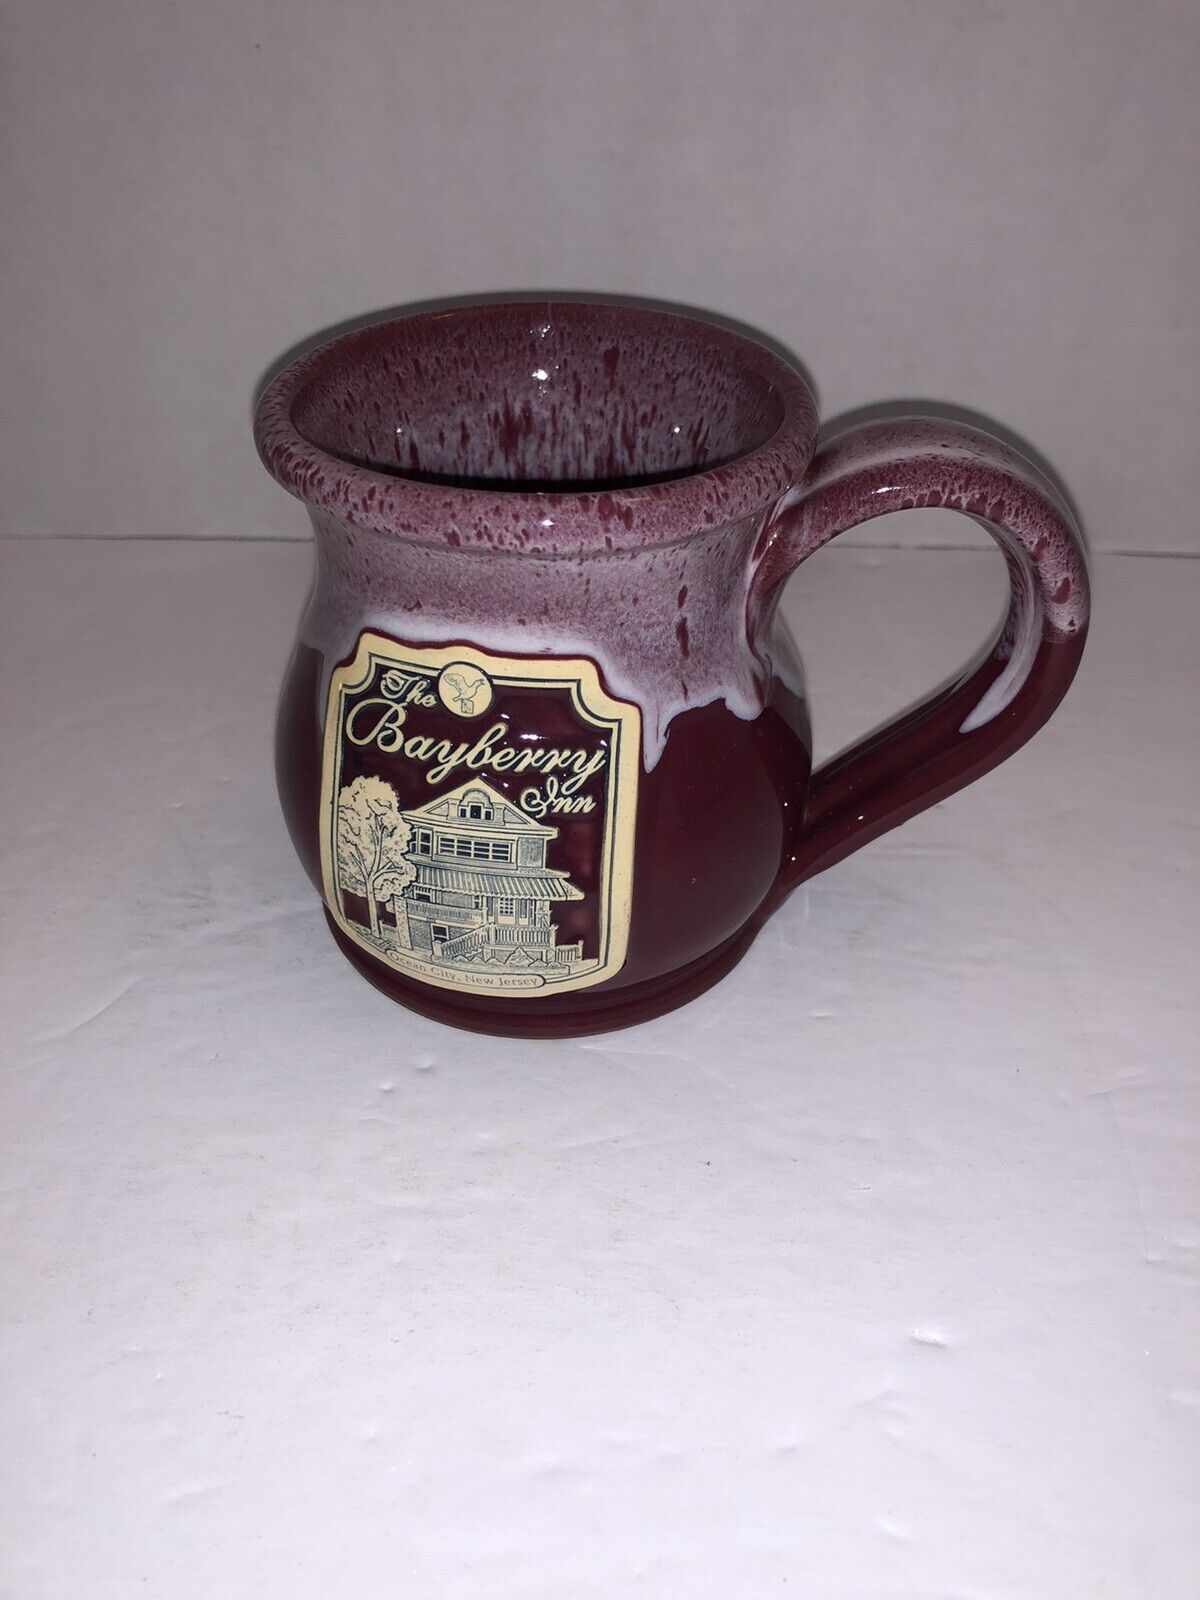 Deneen Pottery (Death Wish Coffee) The Bayberry Inn Ocean City NJ Mug 2006